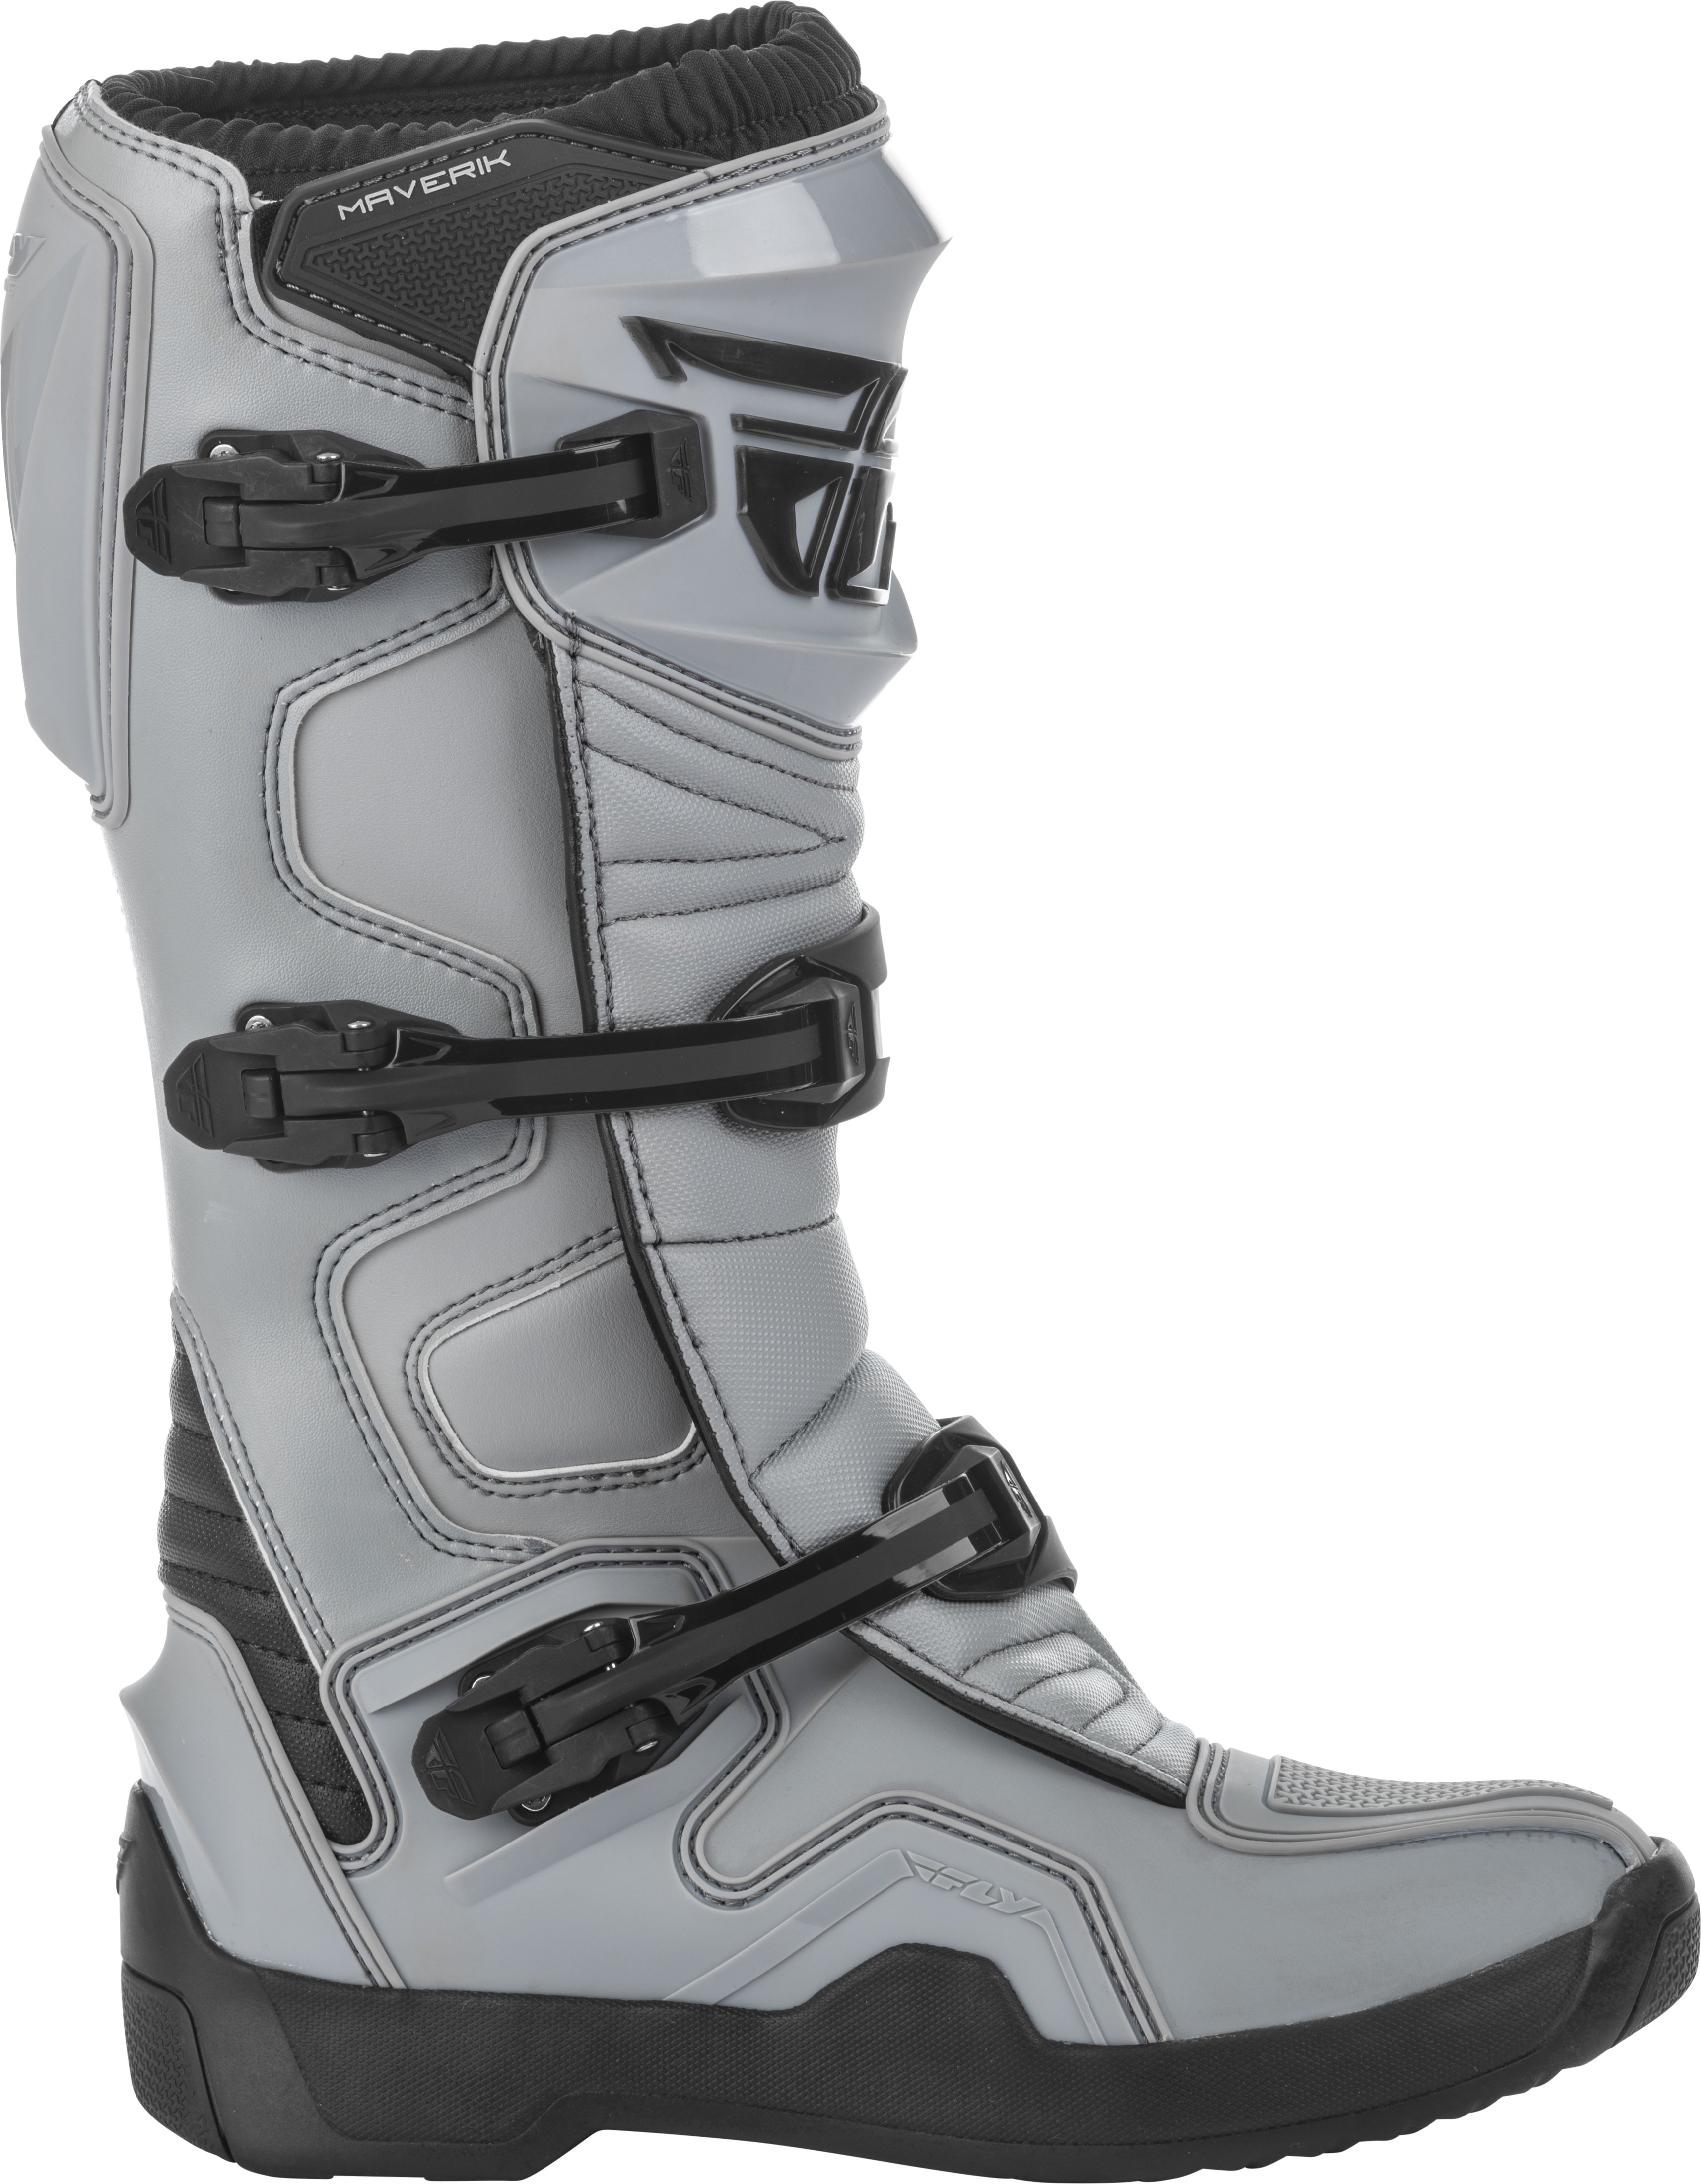 Maverik Boots Grey/Black Size 13 - Click Image to Close